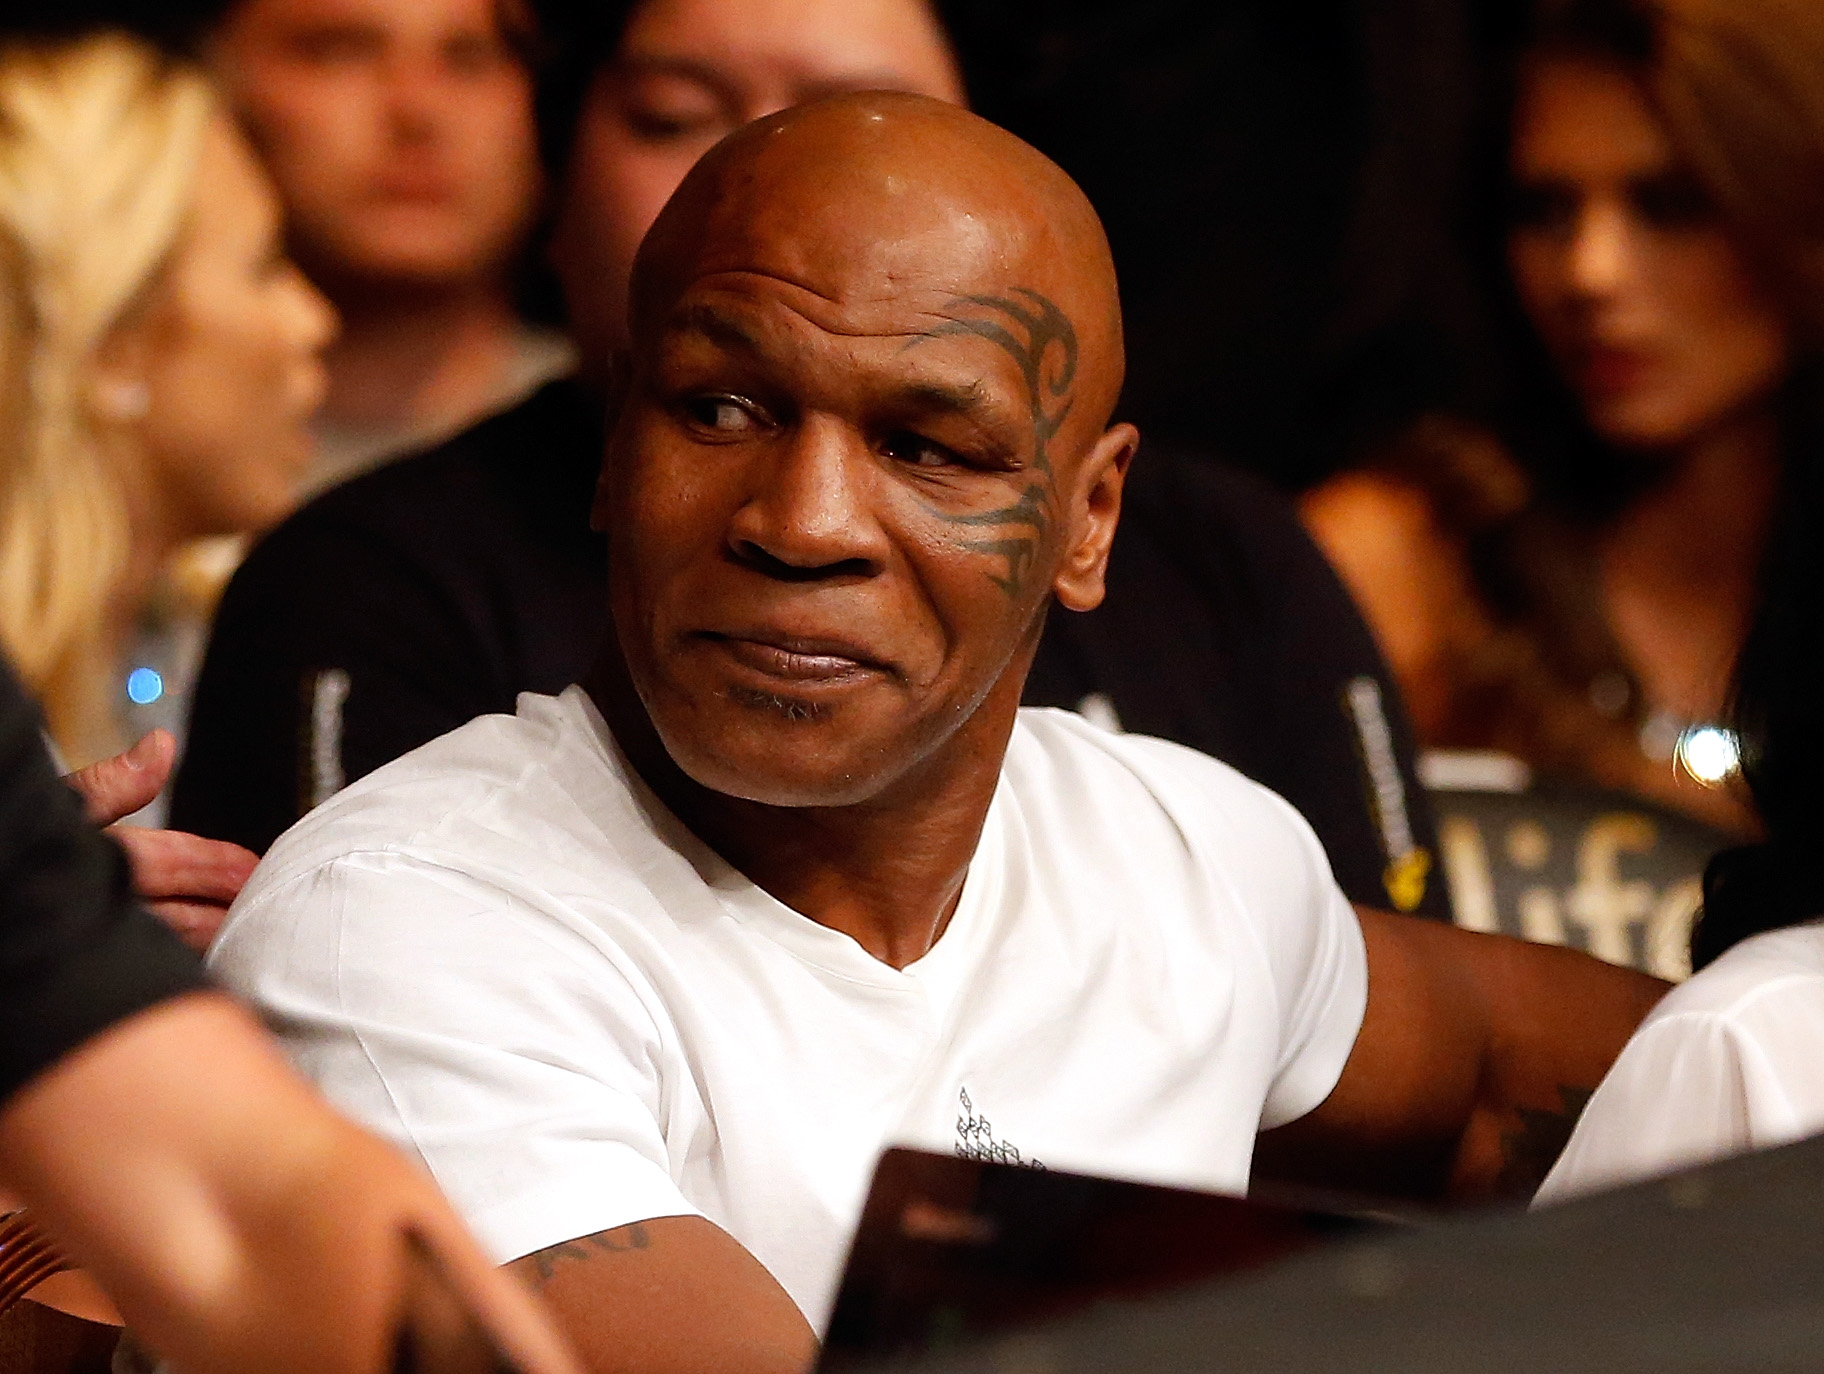 Mike Tyson attending a UFC fight